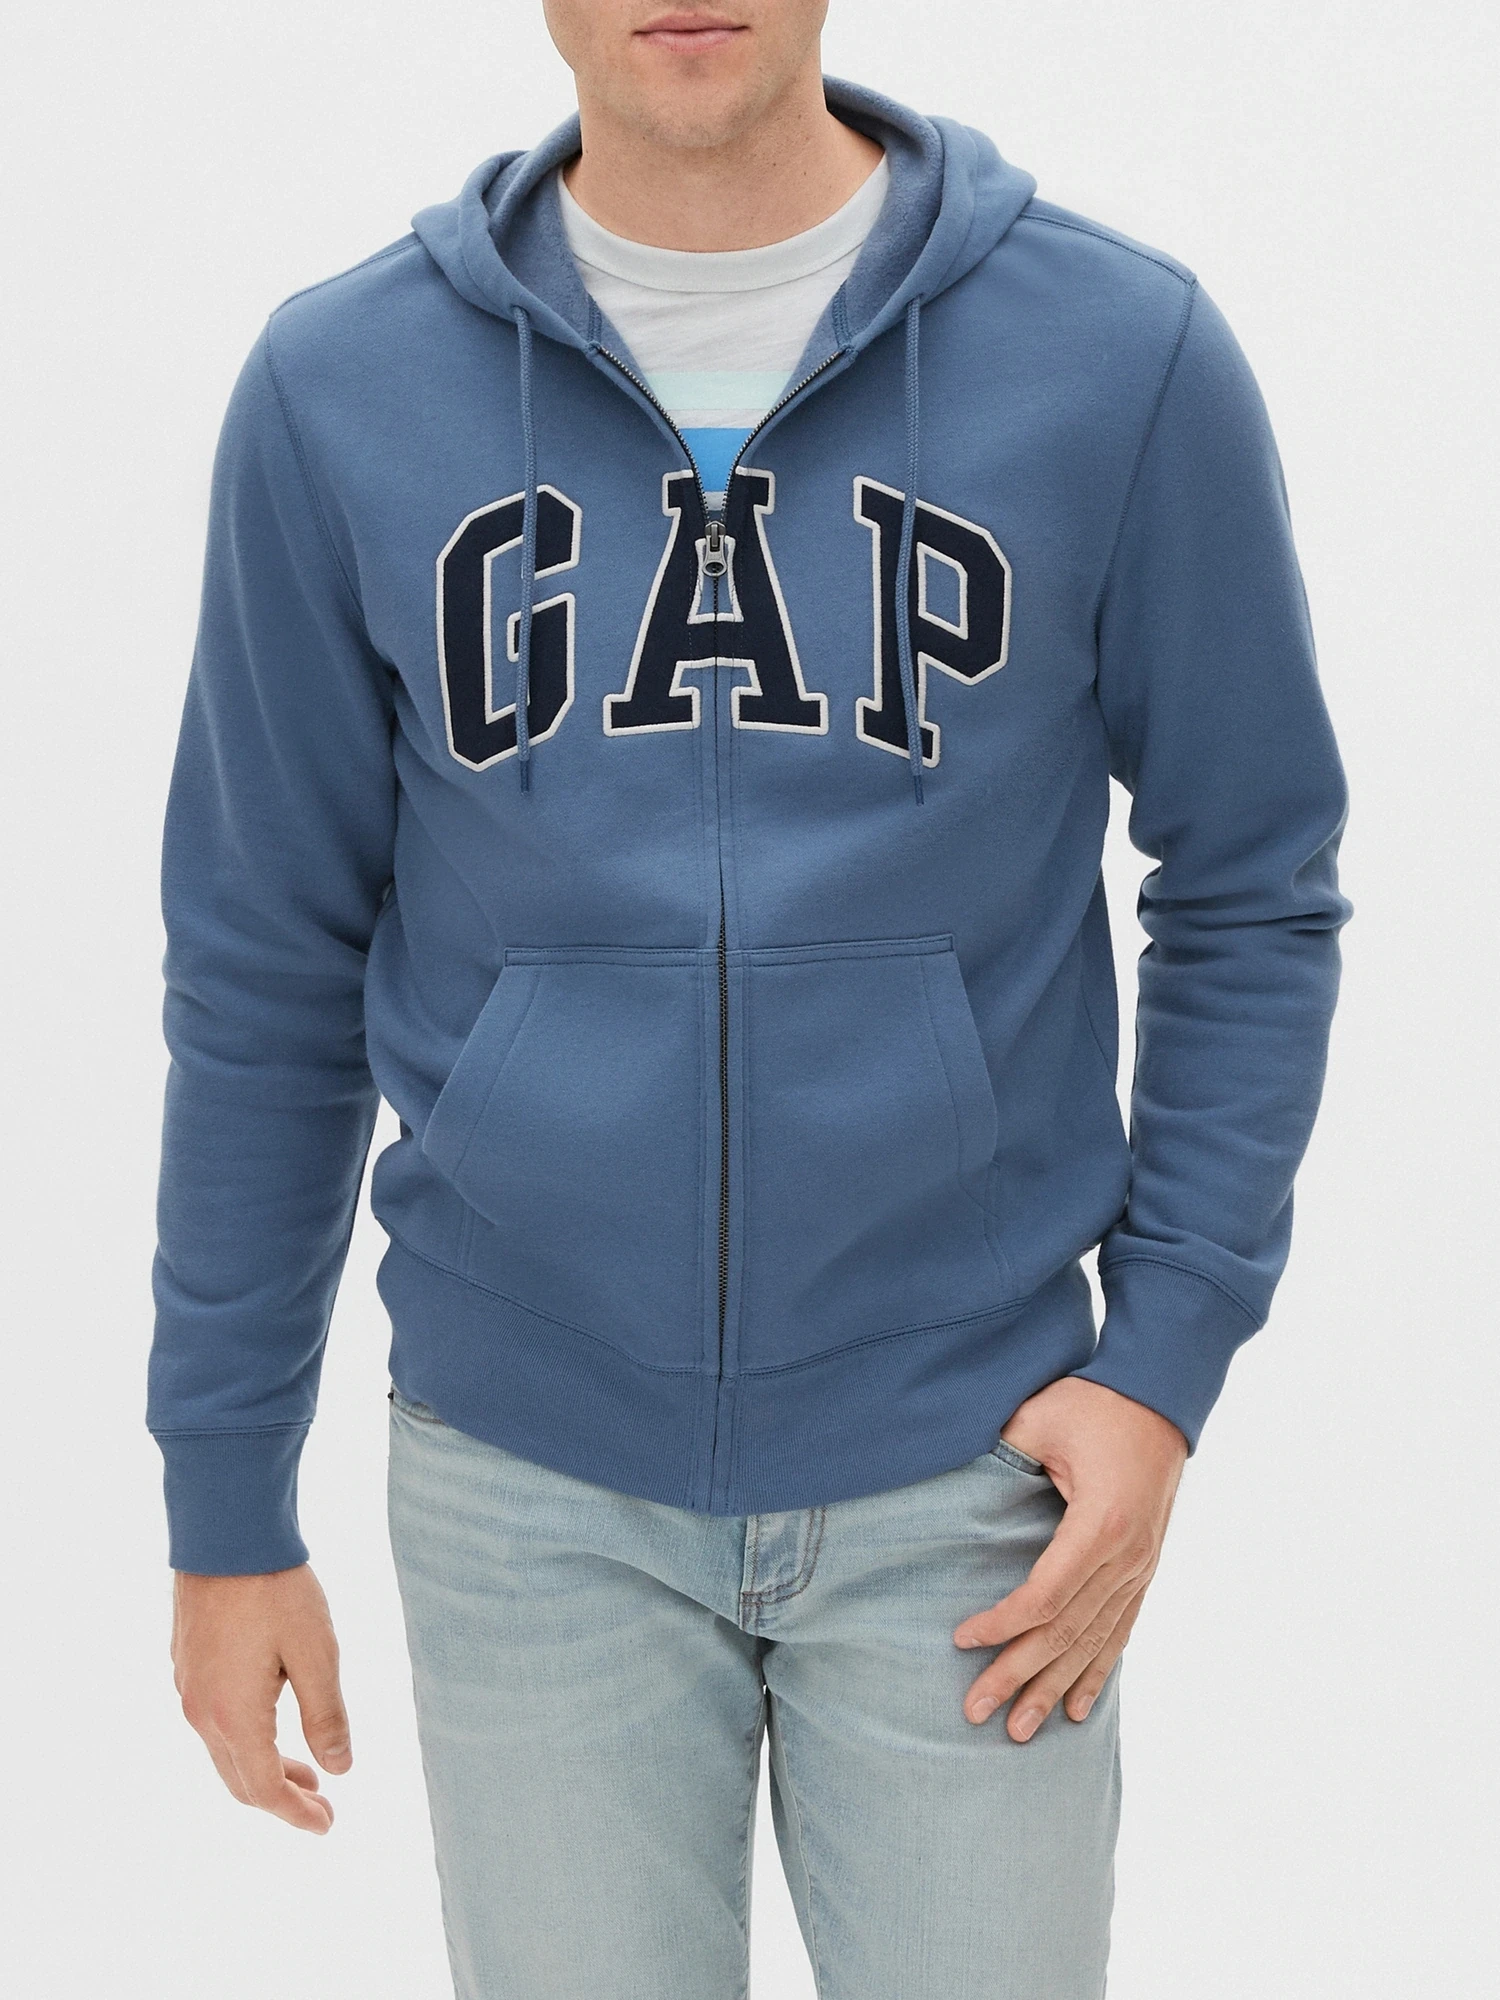 

Jacket gap Zipper Hoodie Men's and Women's Sweatshirt Letter Printed Brushed Super Dalian Hoodie Fashion Hip Hop Street Sweater